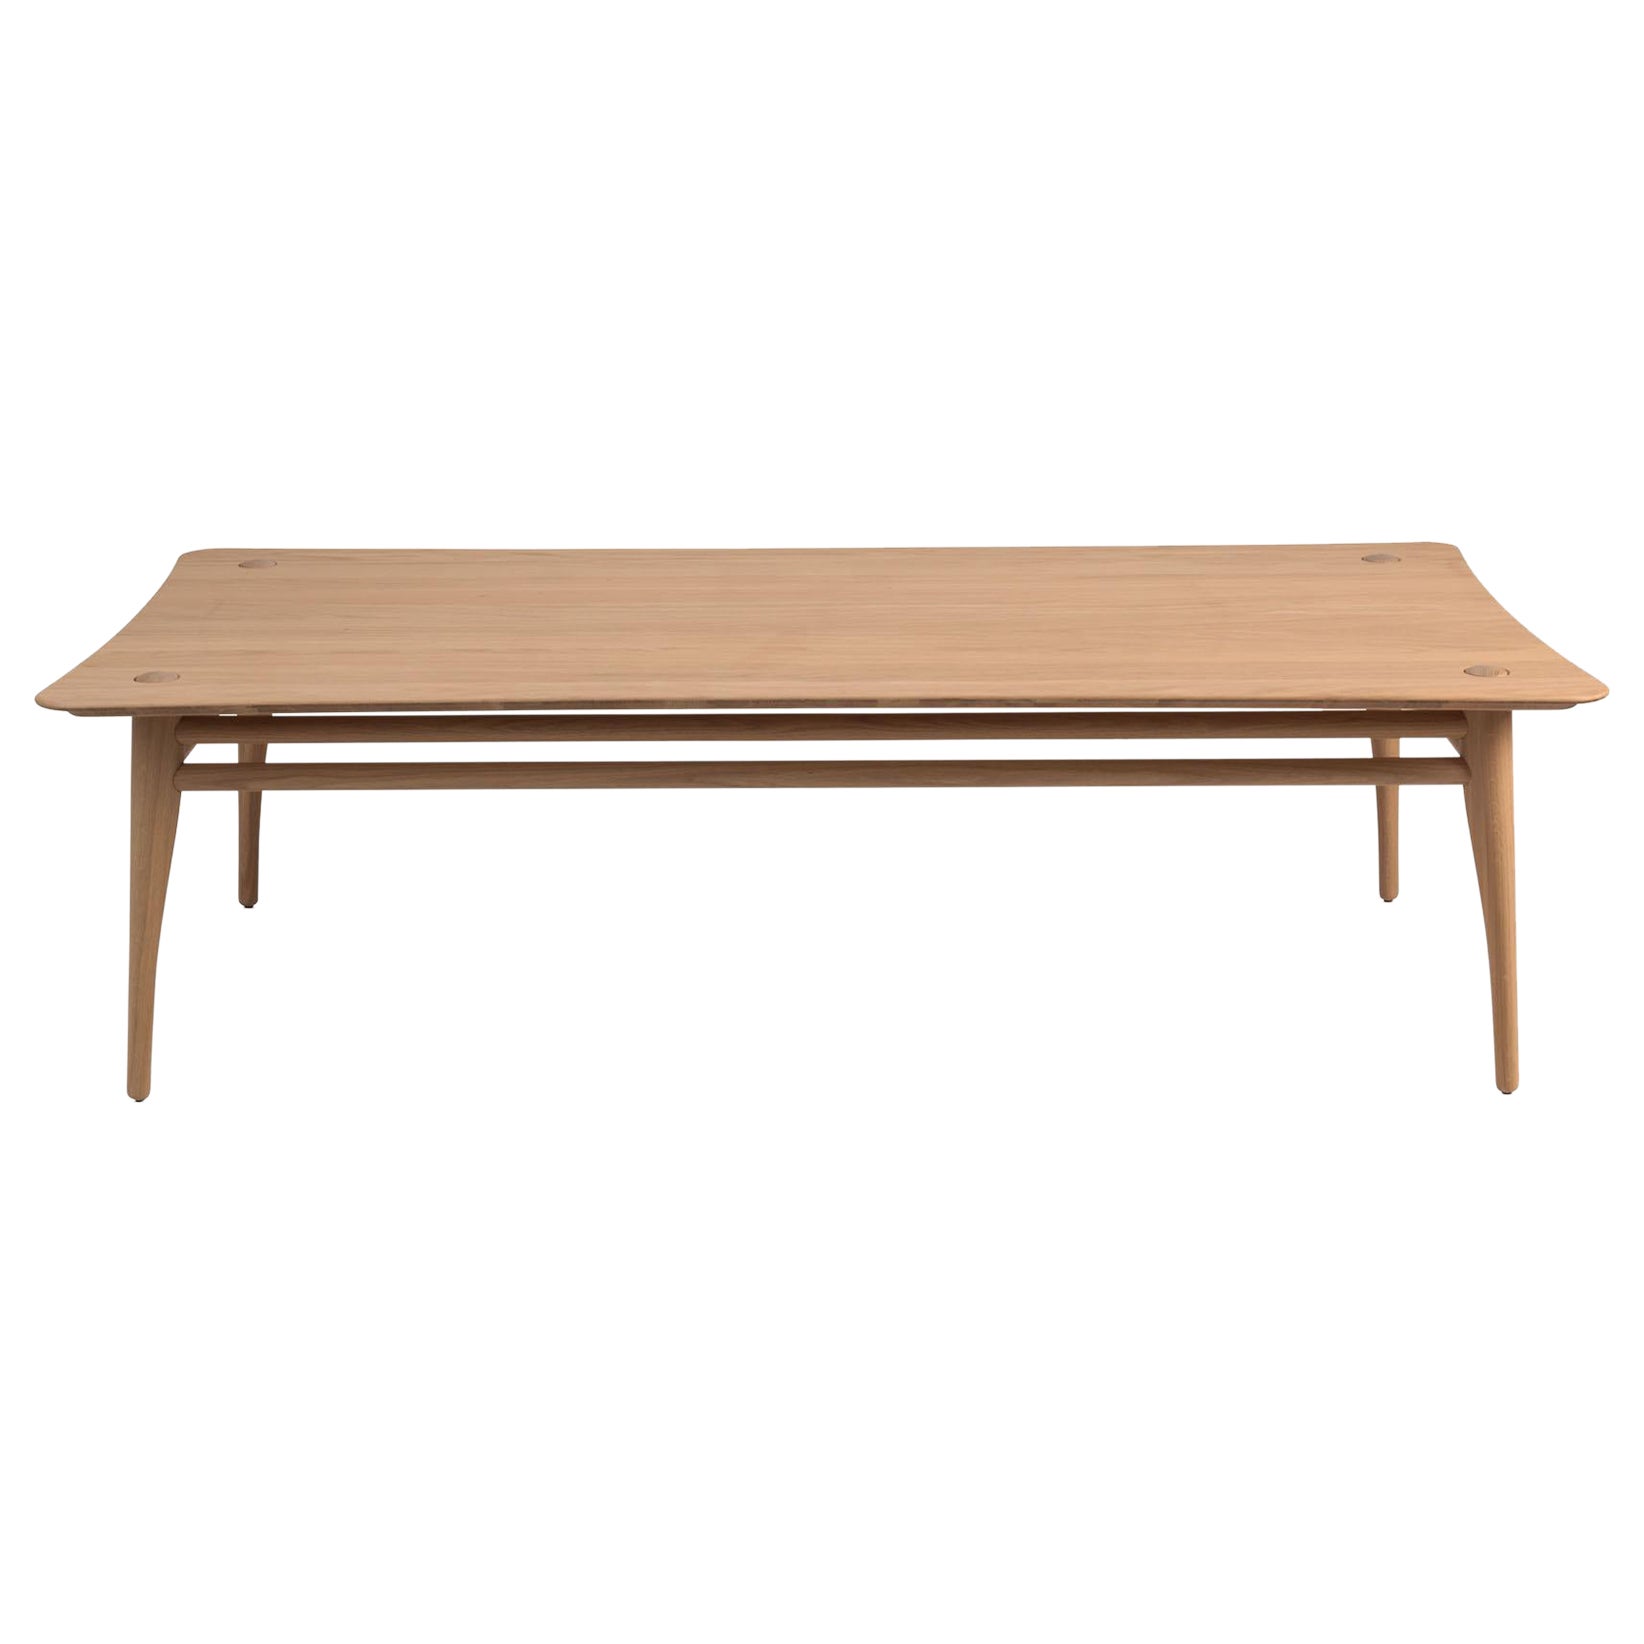 Oak Oak - table basse en chêne massif - rectangle 120x60cm